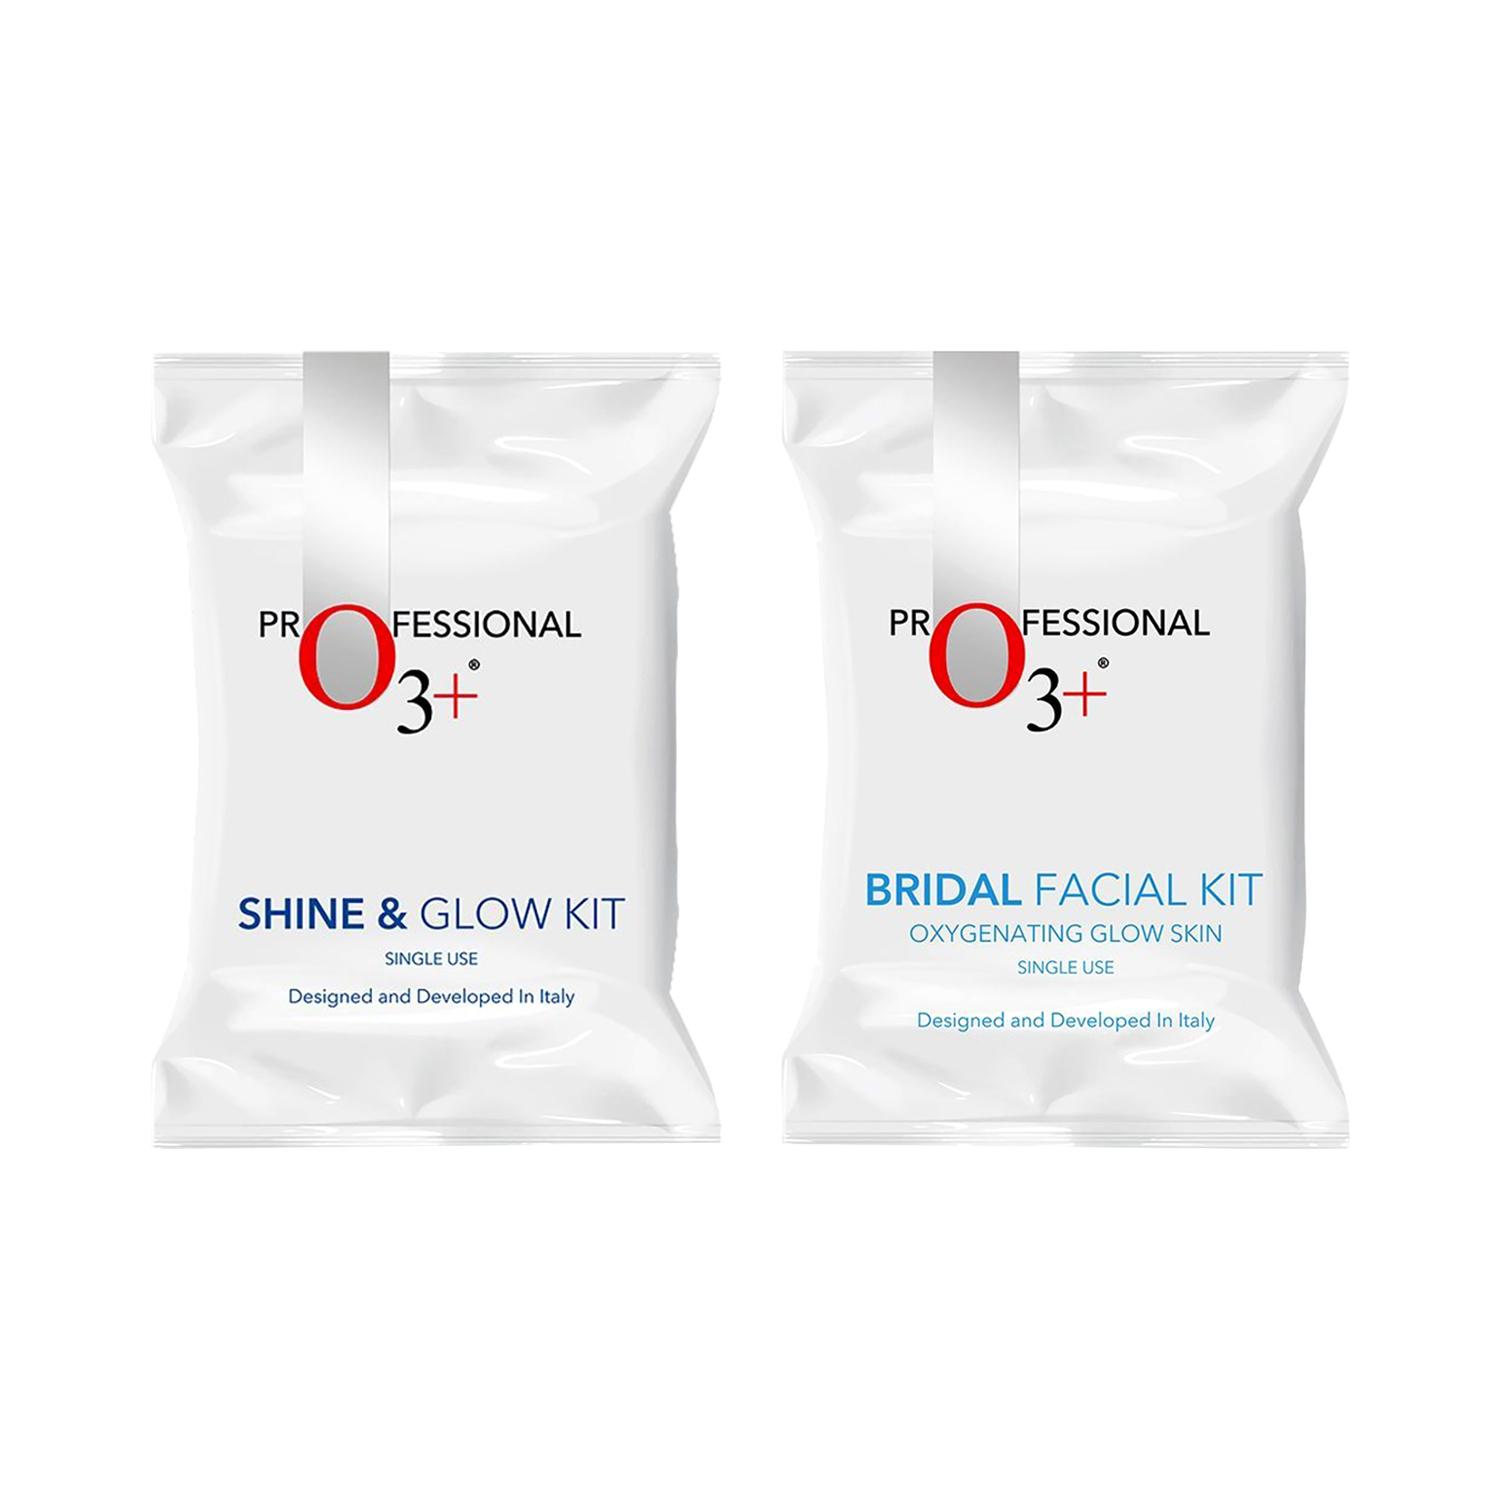 O3+ | O3+ Bridal Oxygenating Glow Skin Facial Kit - (81g) & Single Use Shine & Glow Kit - (38g) Combo